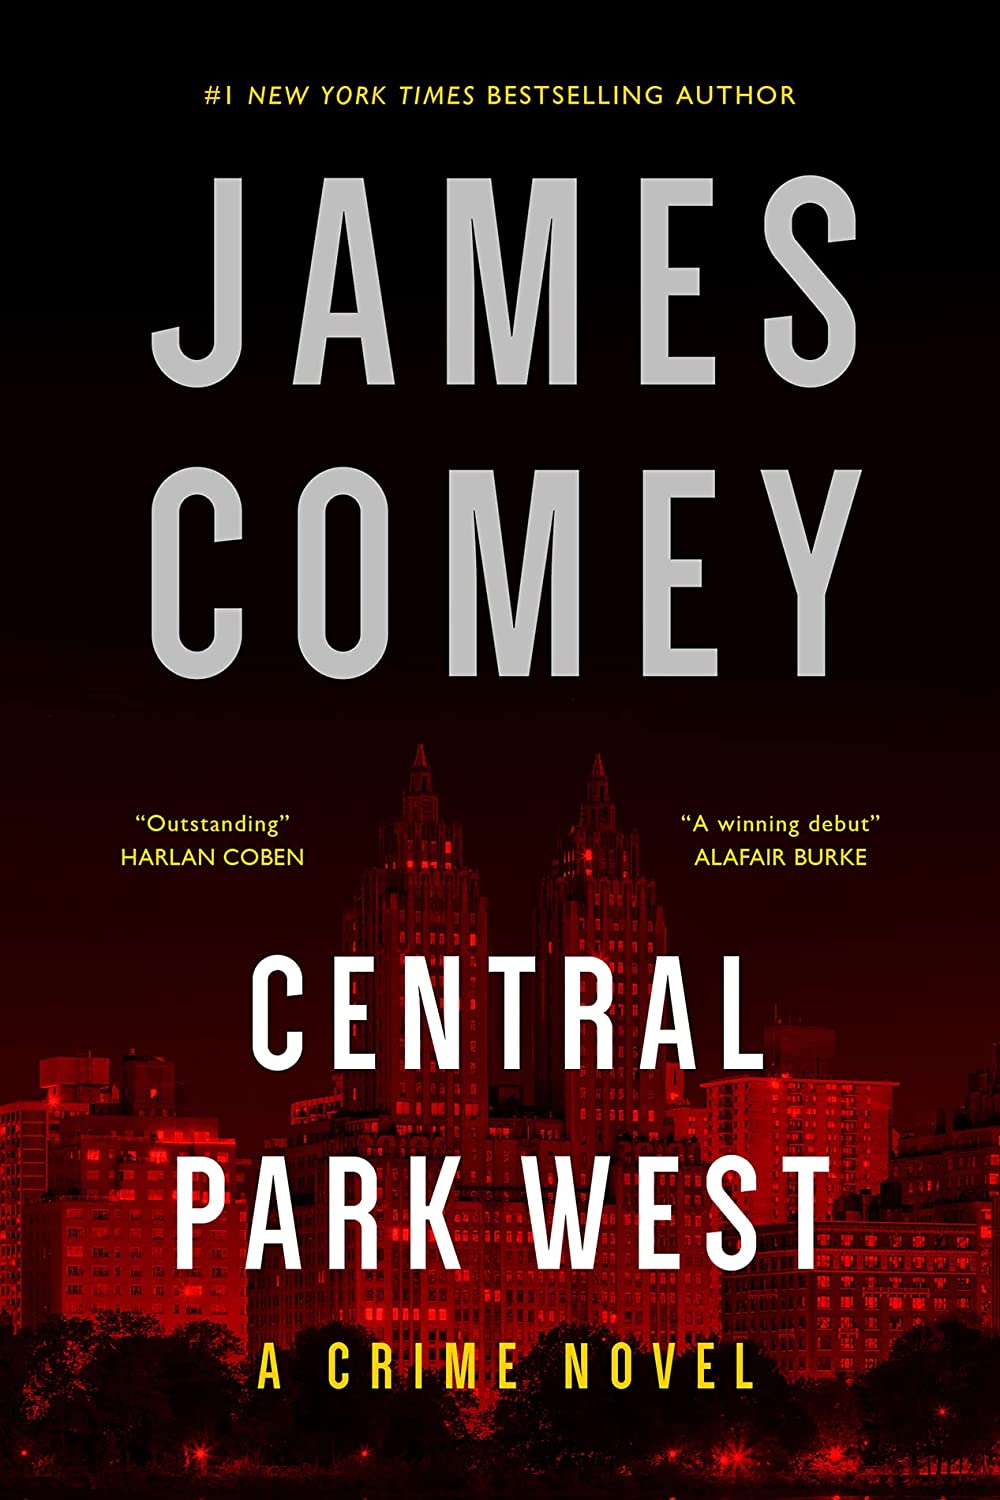 Author Event with James Comey/Central Park West